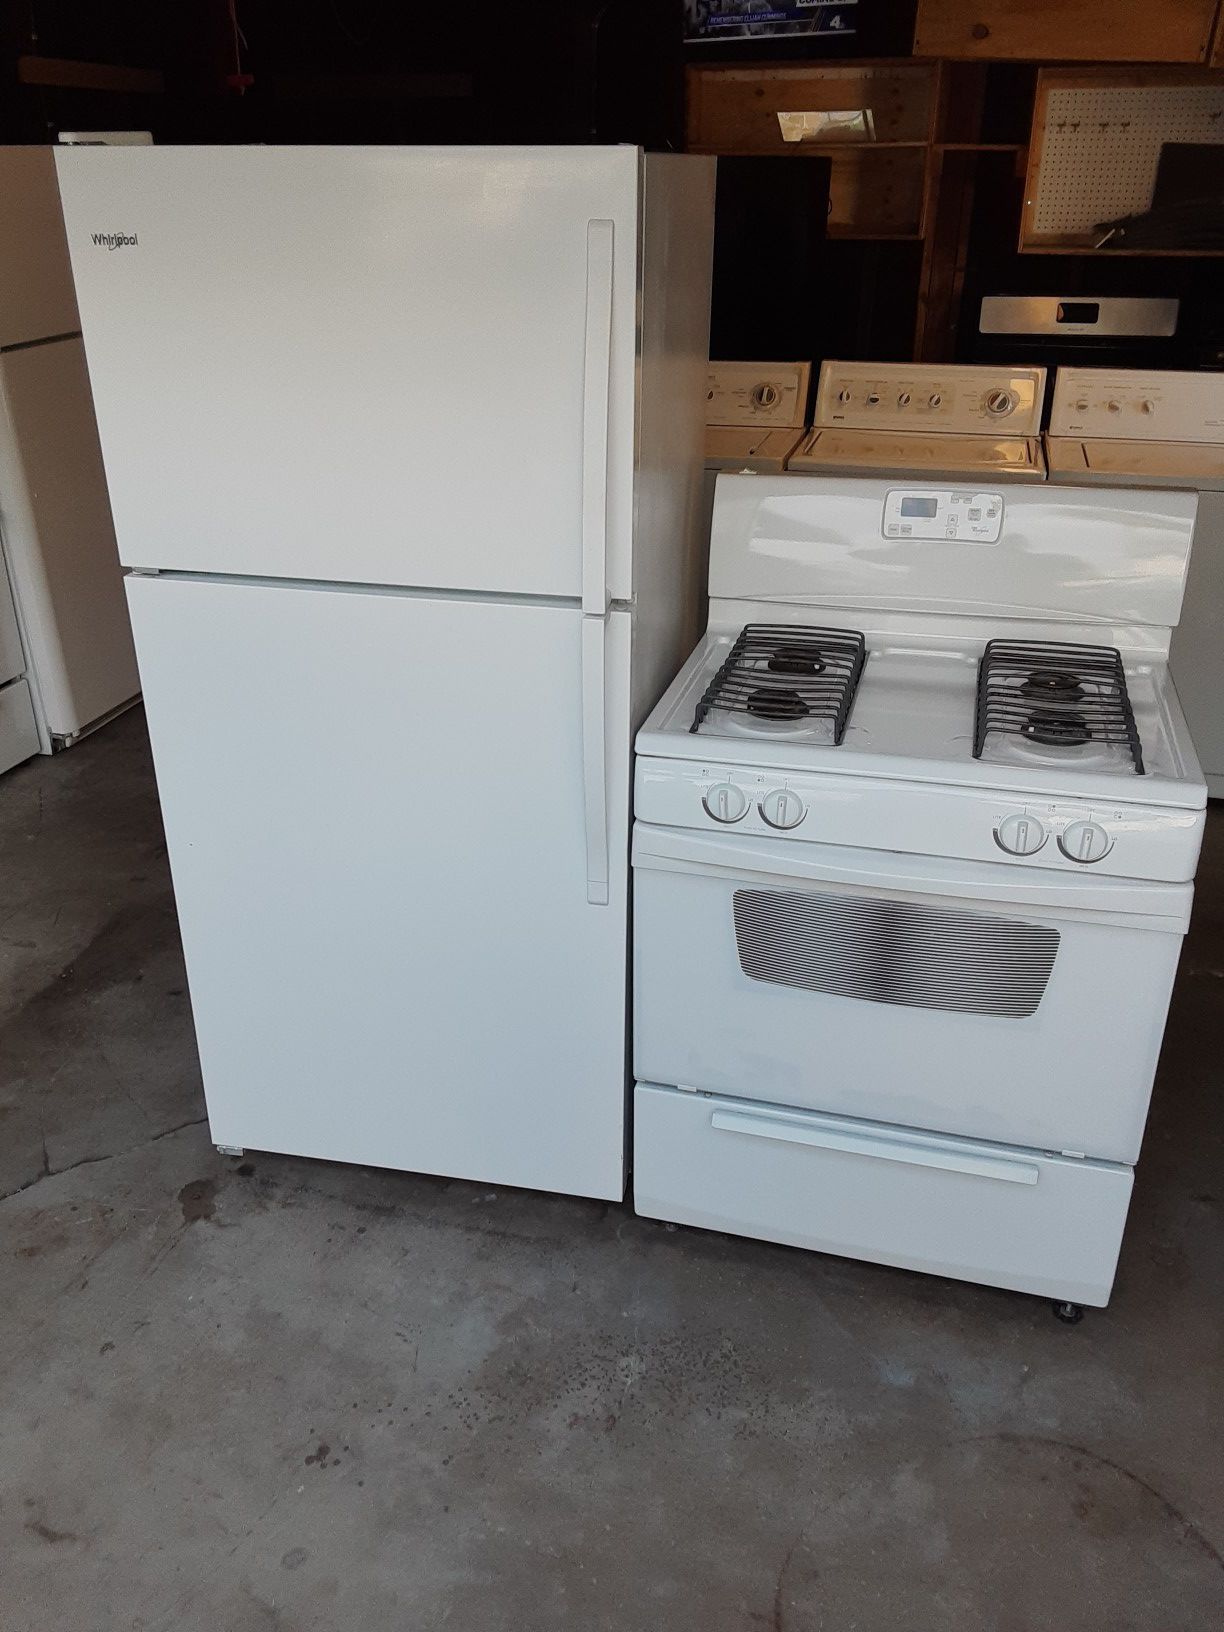 Whirlpool refrigerator and stove